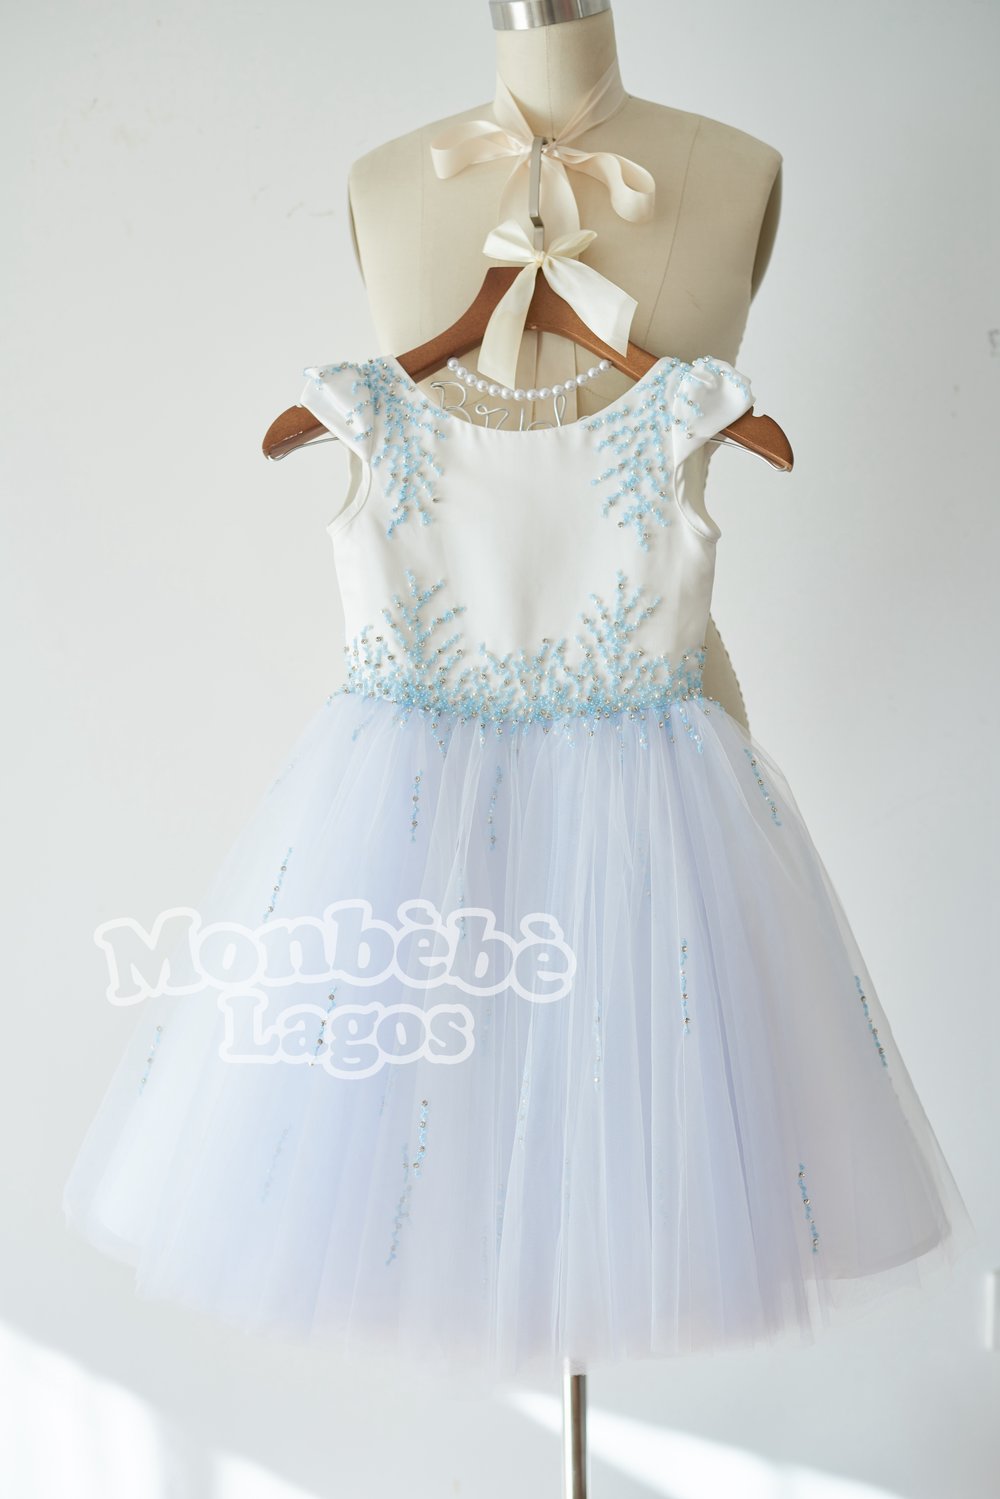 Bubbles Pearl Dress